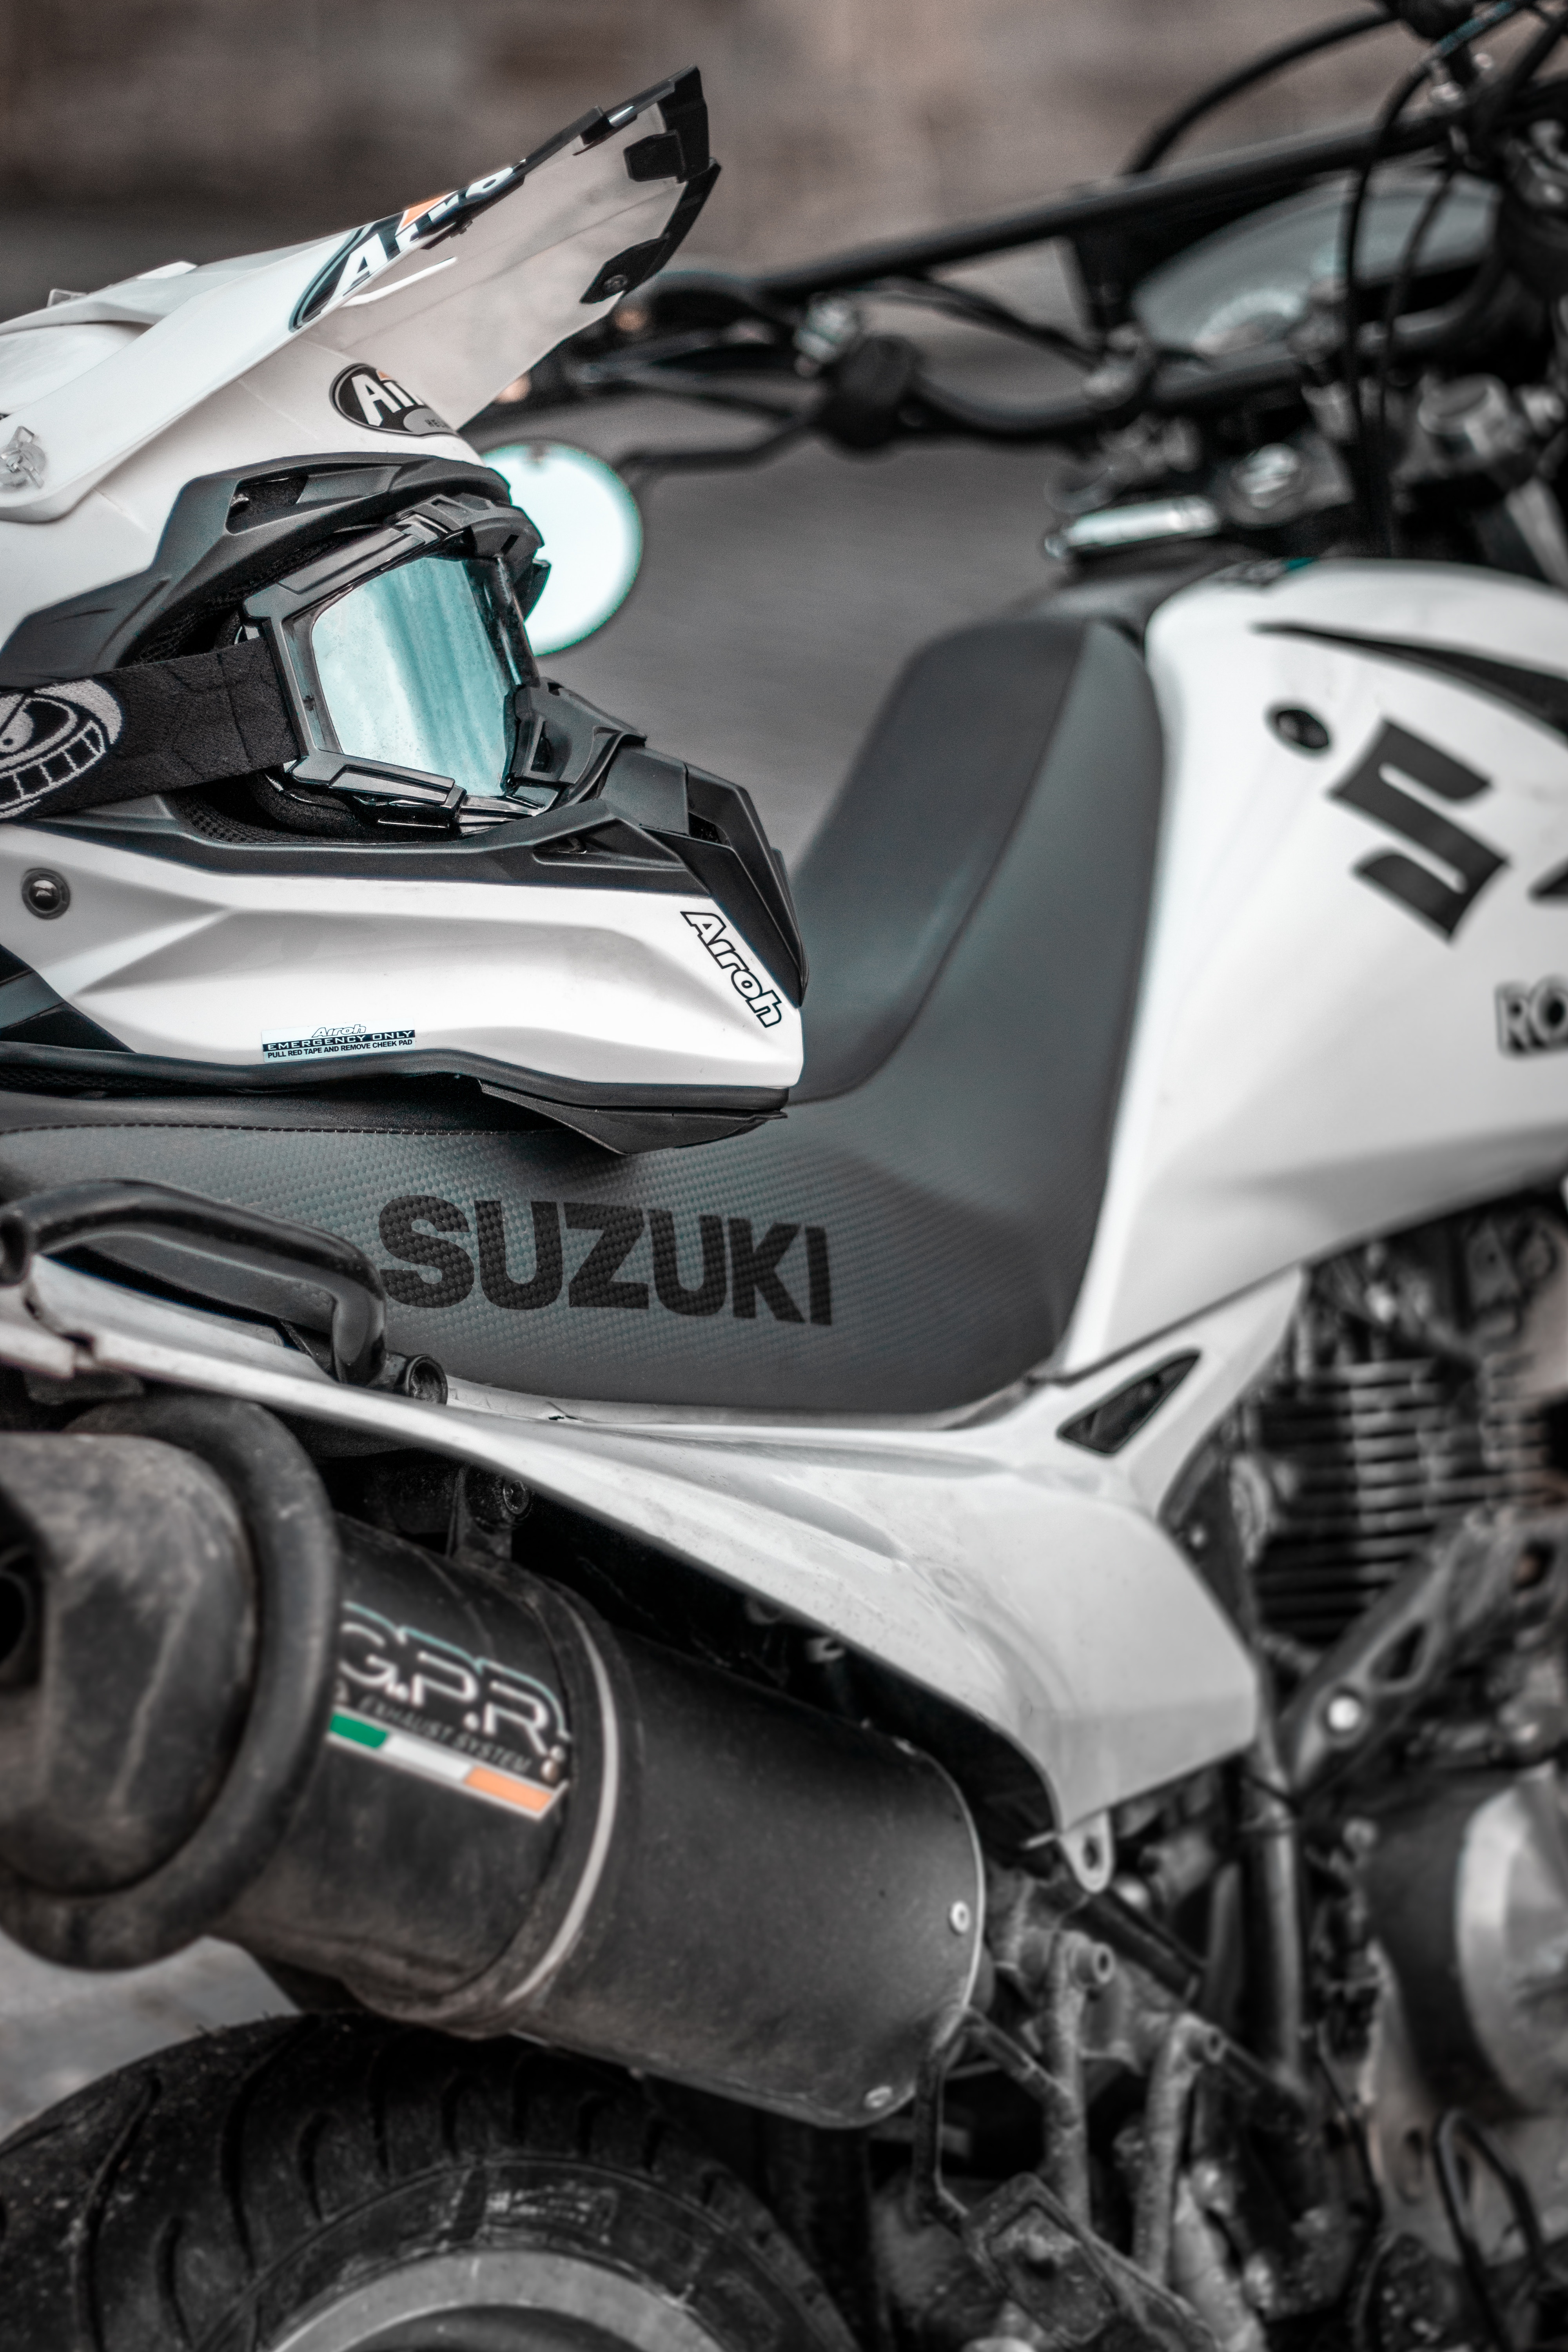 72016 скачать картинку мотоциклы, шлем, сузуки (suzuki), мотоцикл, байк - обои и заставки бесплатно